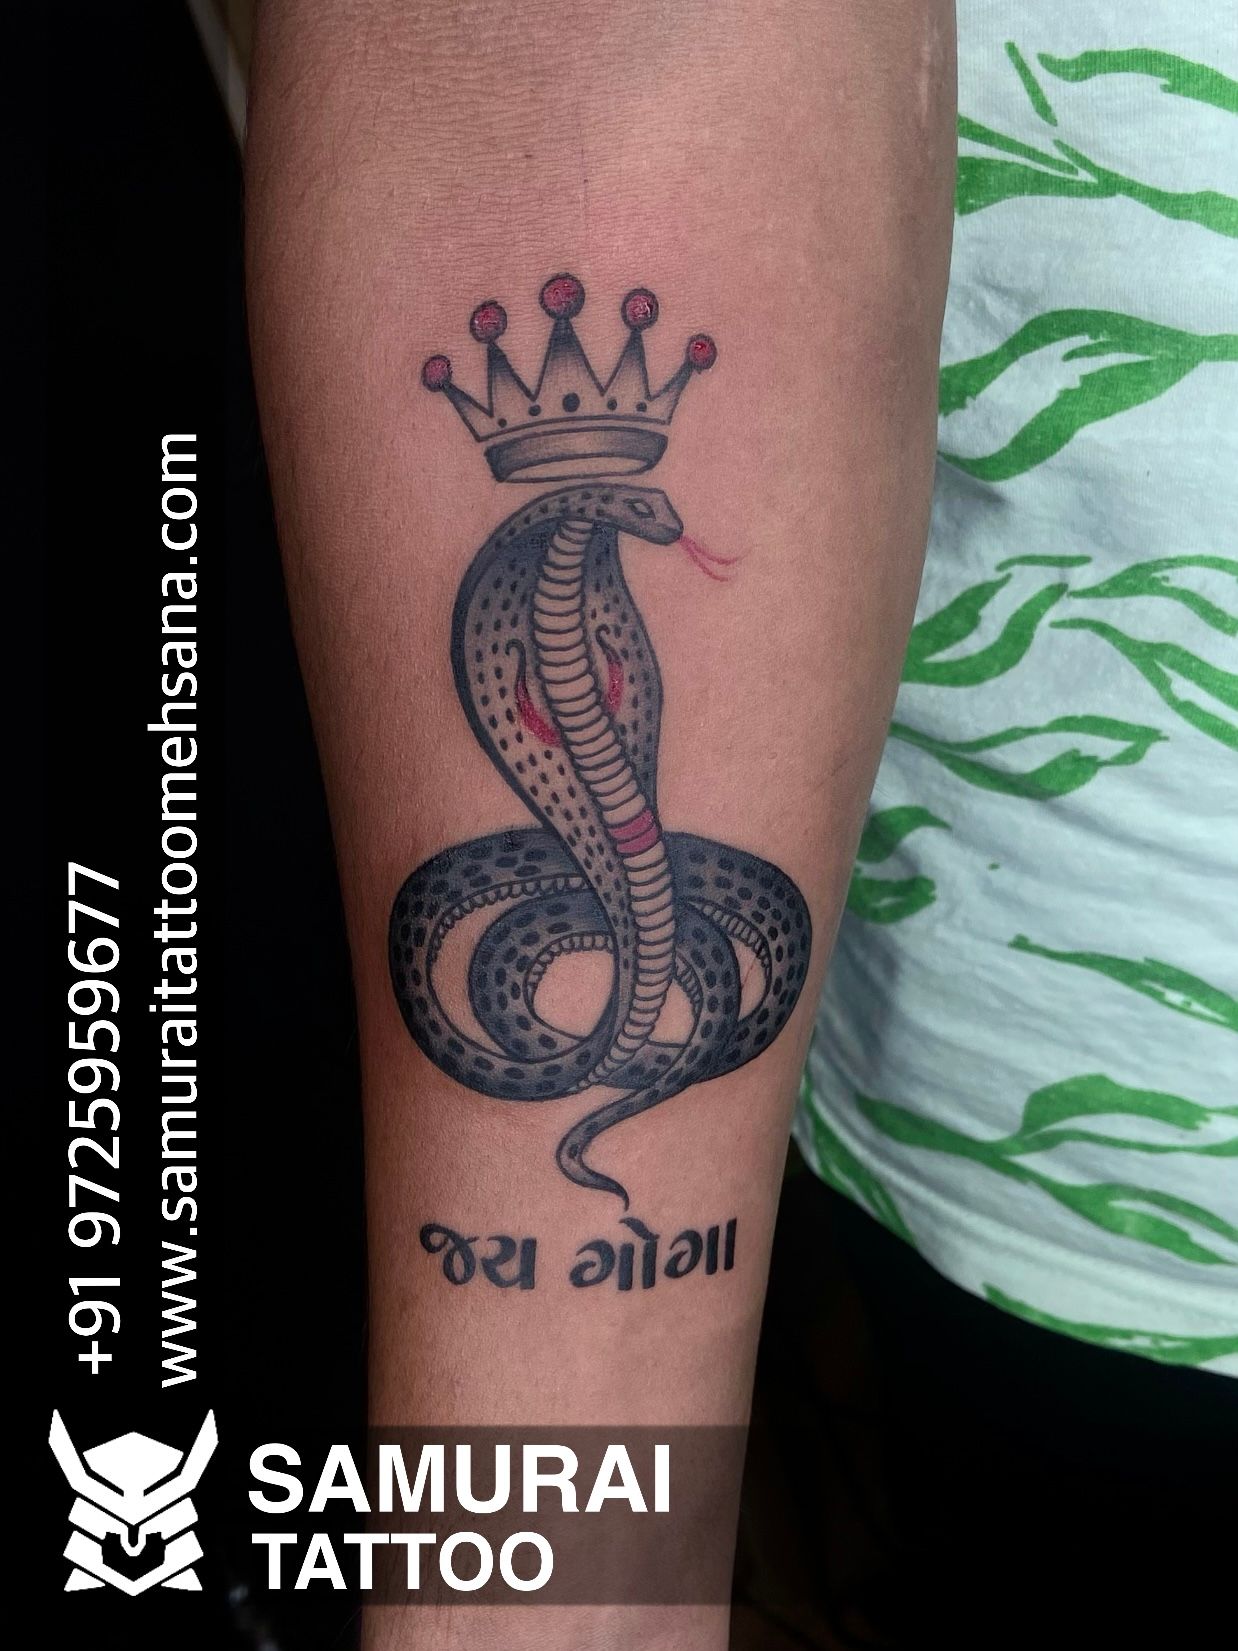 Goga maharaj tattoo | Baby tattoo designs, Shiva tattoo design, Baby tattoos